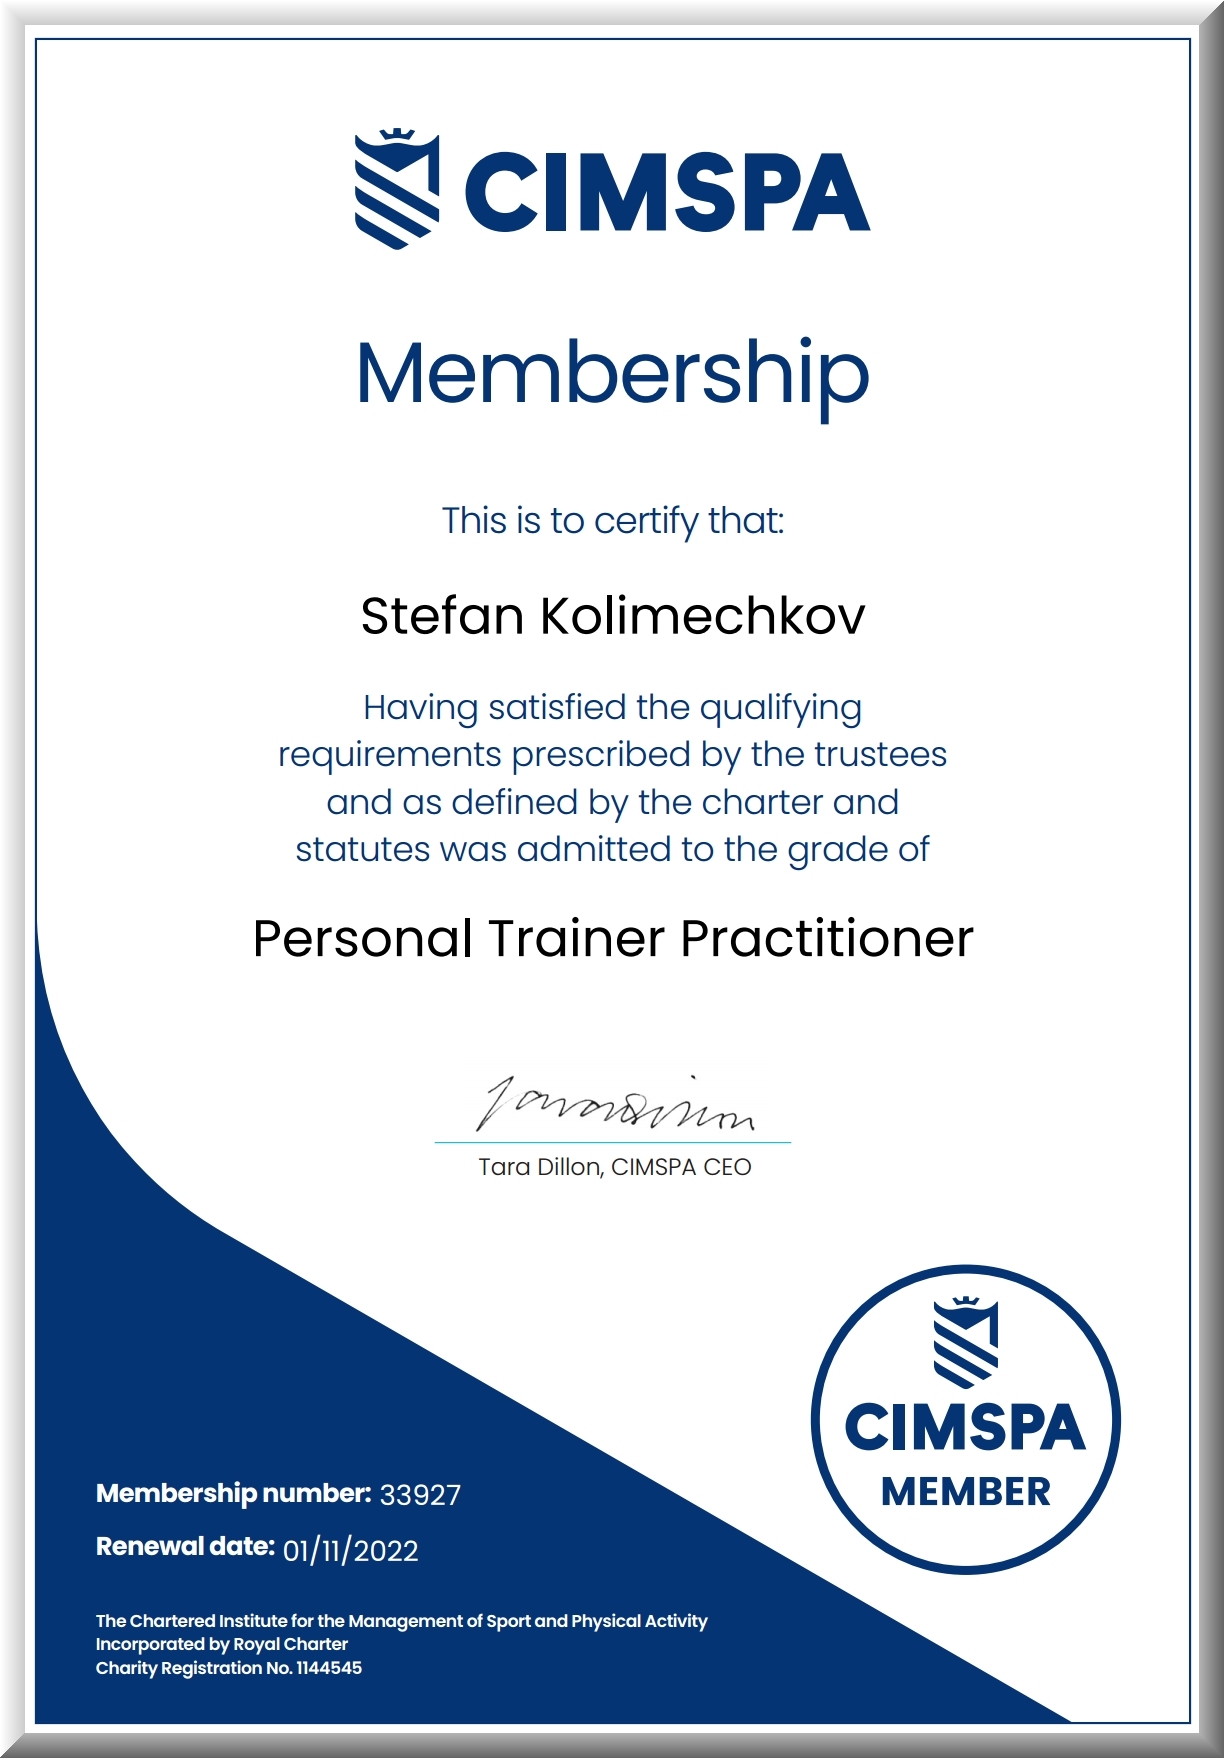 Personal Trainer Practitioner of CIMSPA